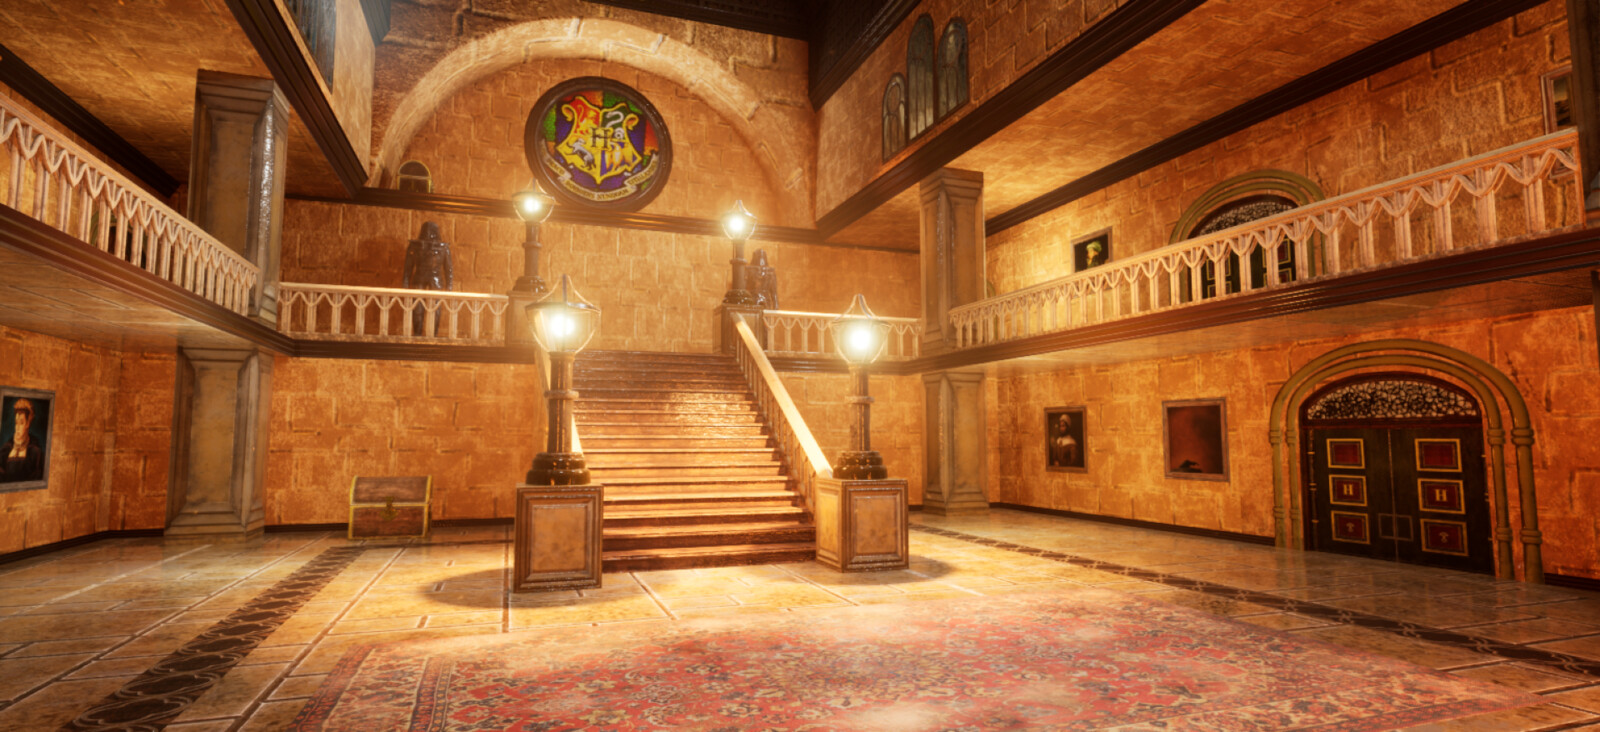 Hogwarts' entrance hall.